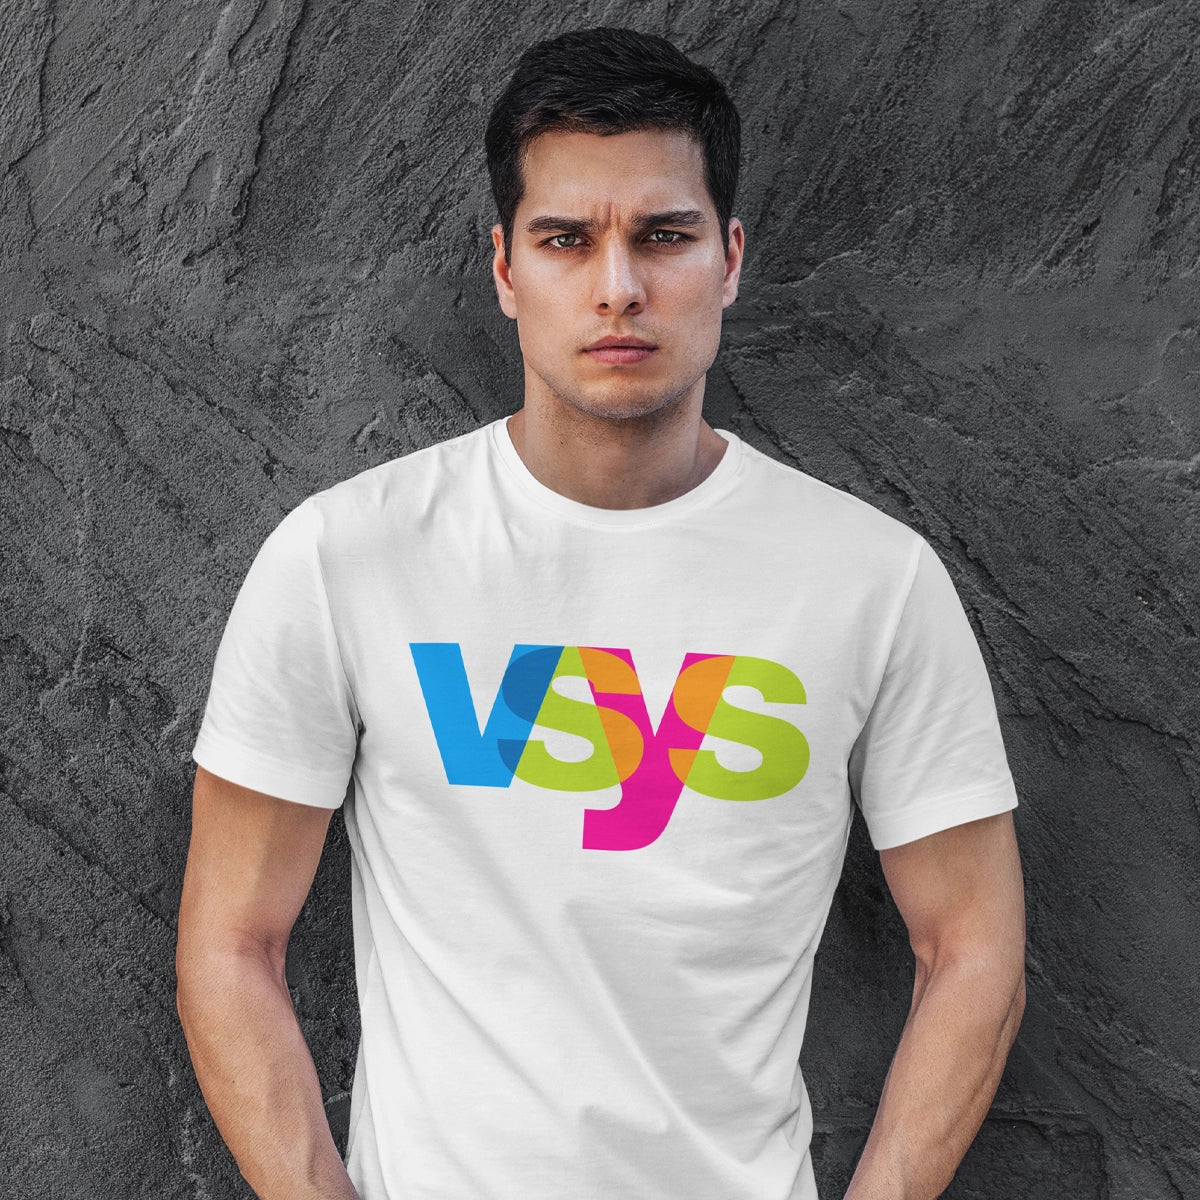 VSYS.com